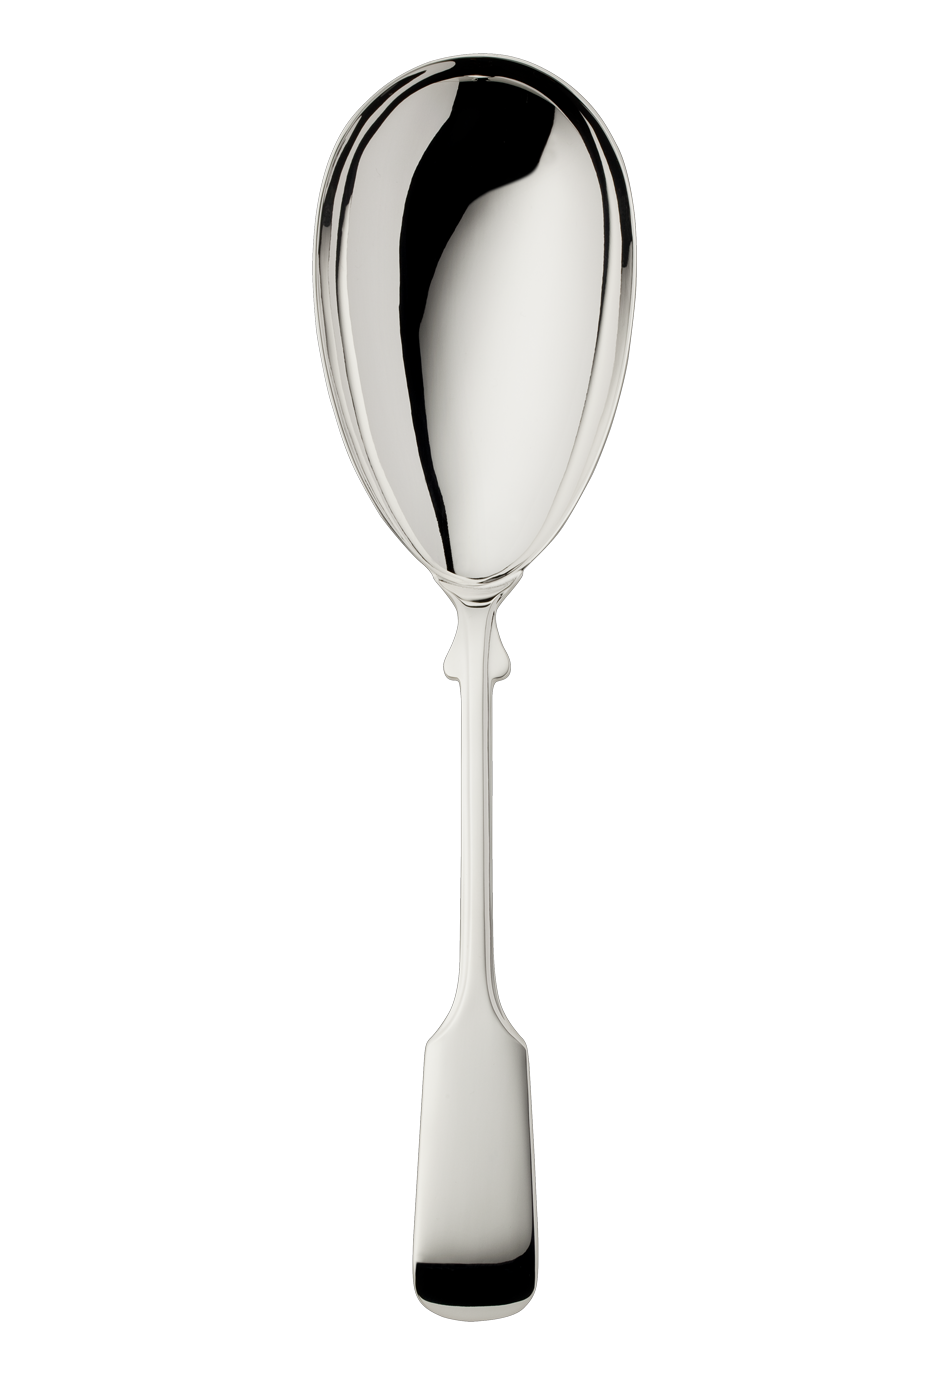 Alt-Spaten Serving Spoon (150g massive silverplated)